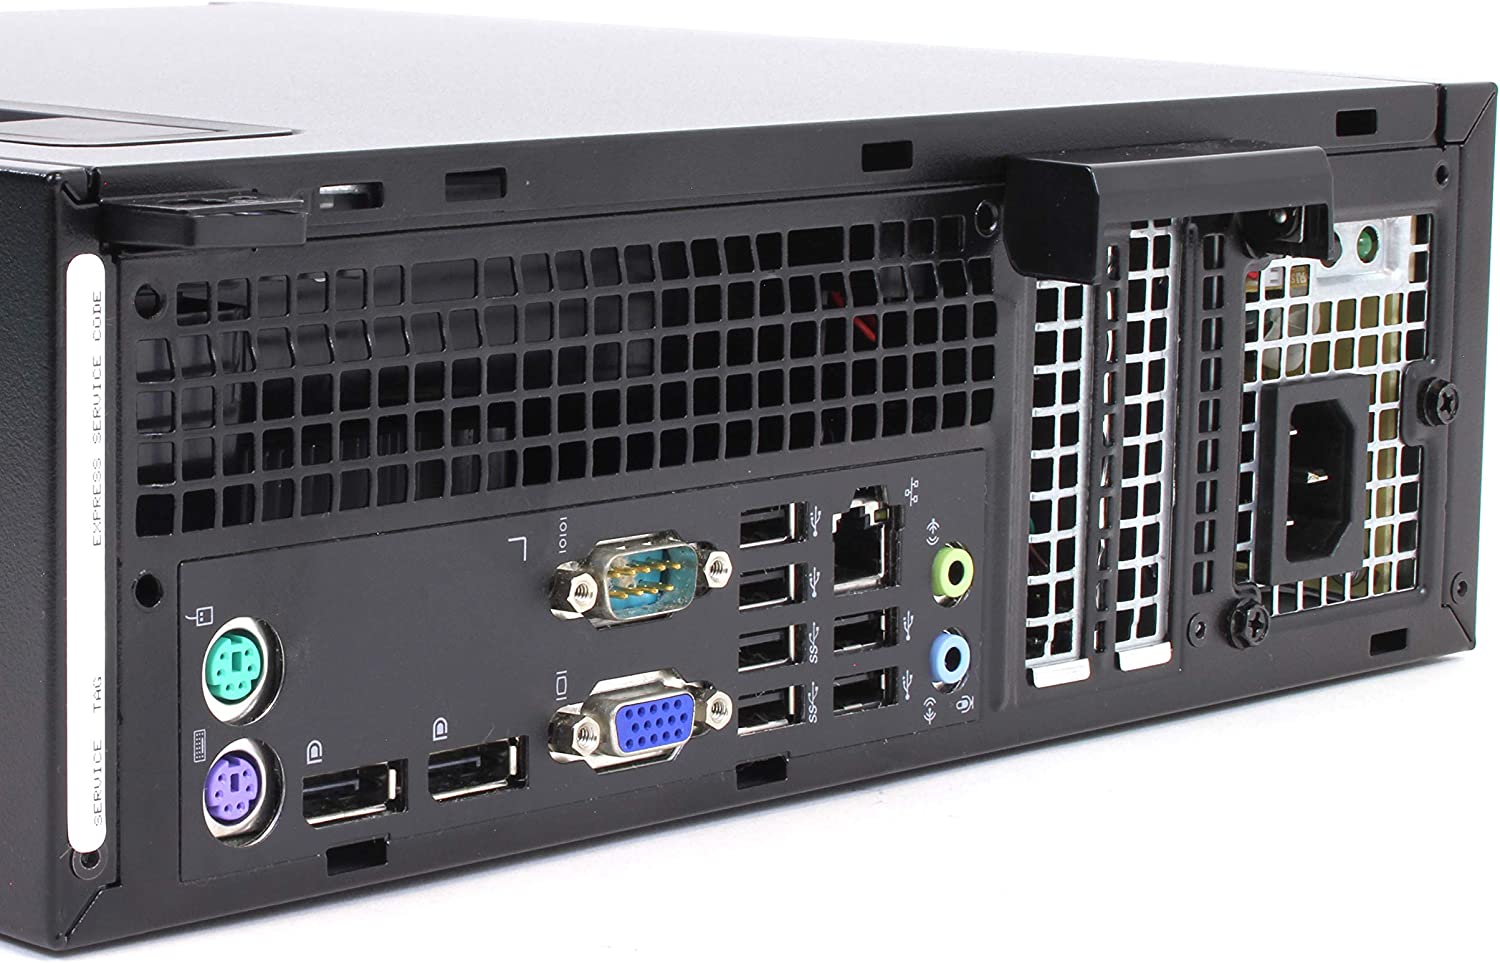 PC Dell Optiplex 9020 SFF (i7-4790, 8GB RAM, 240 GB SSD) Reacondicionado Grado A